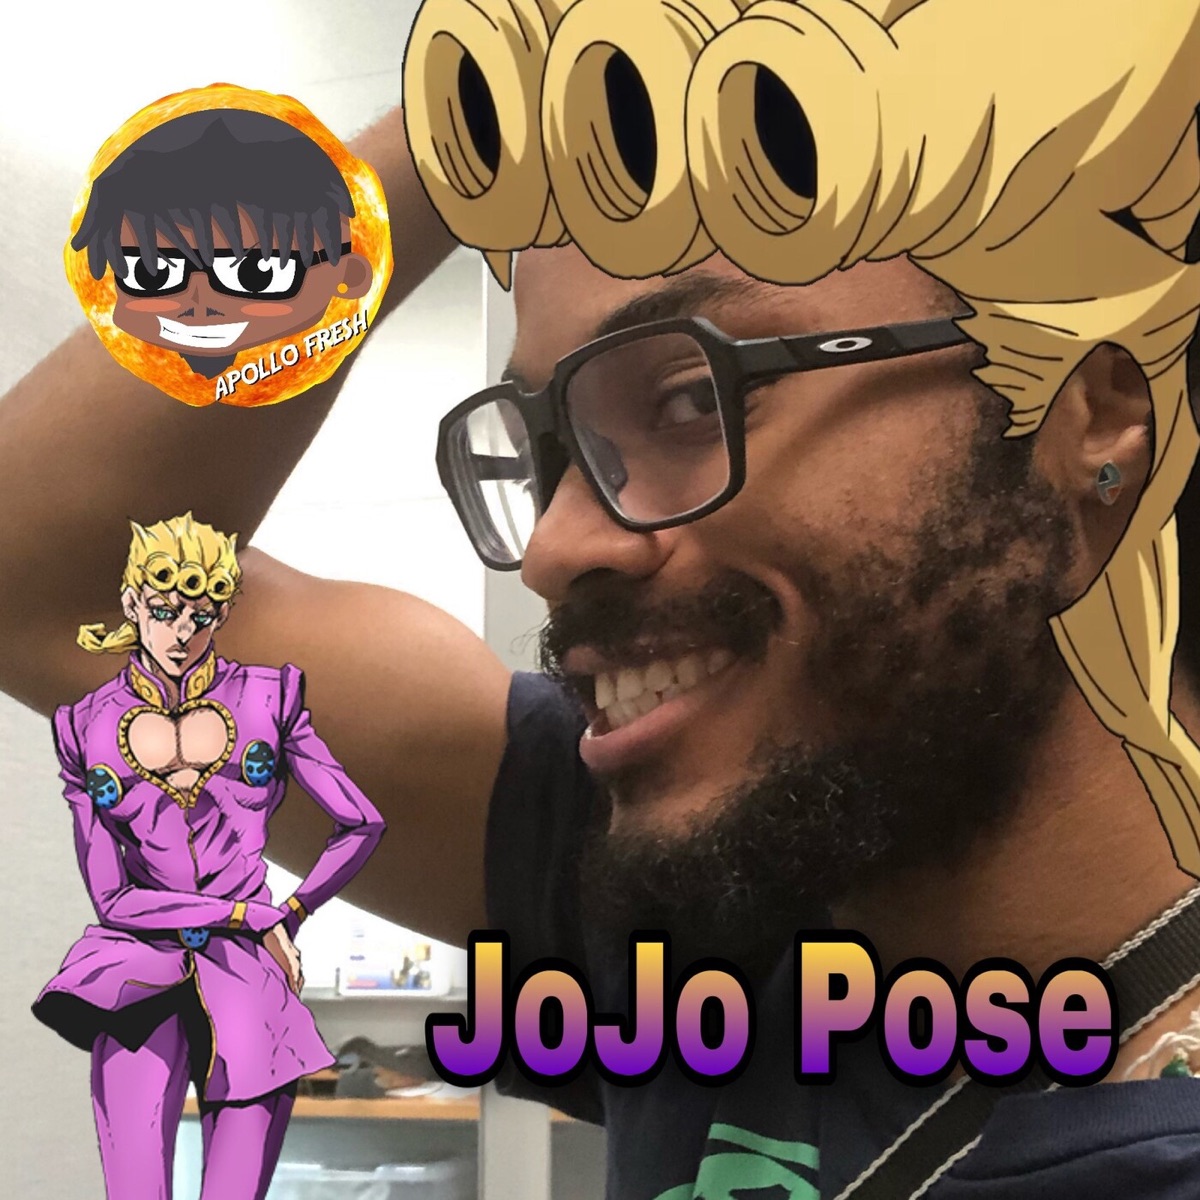 JoJo Pose - Single - Album by Apollo Fresh - Apple Music